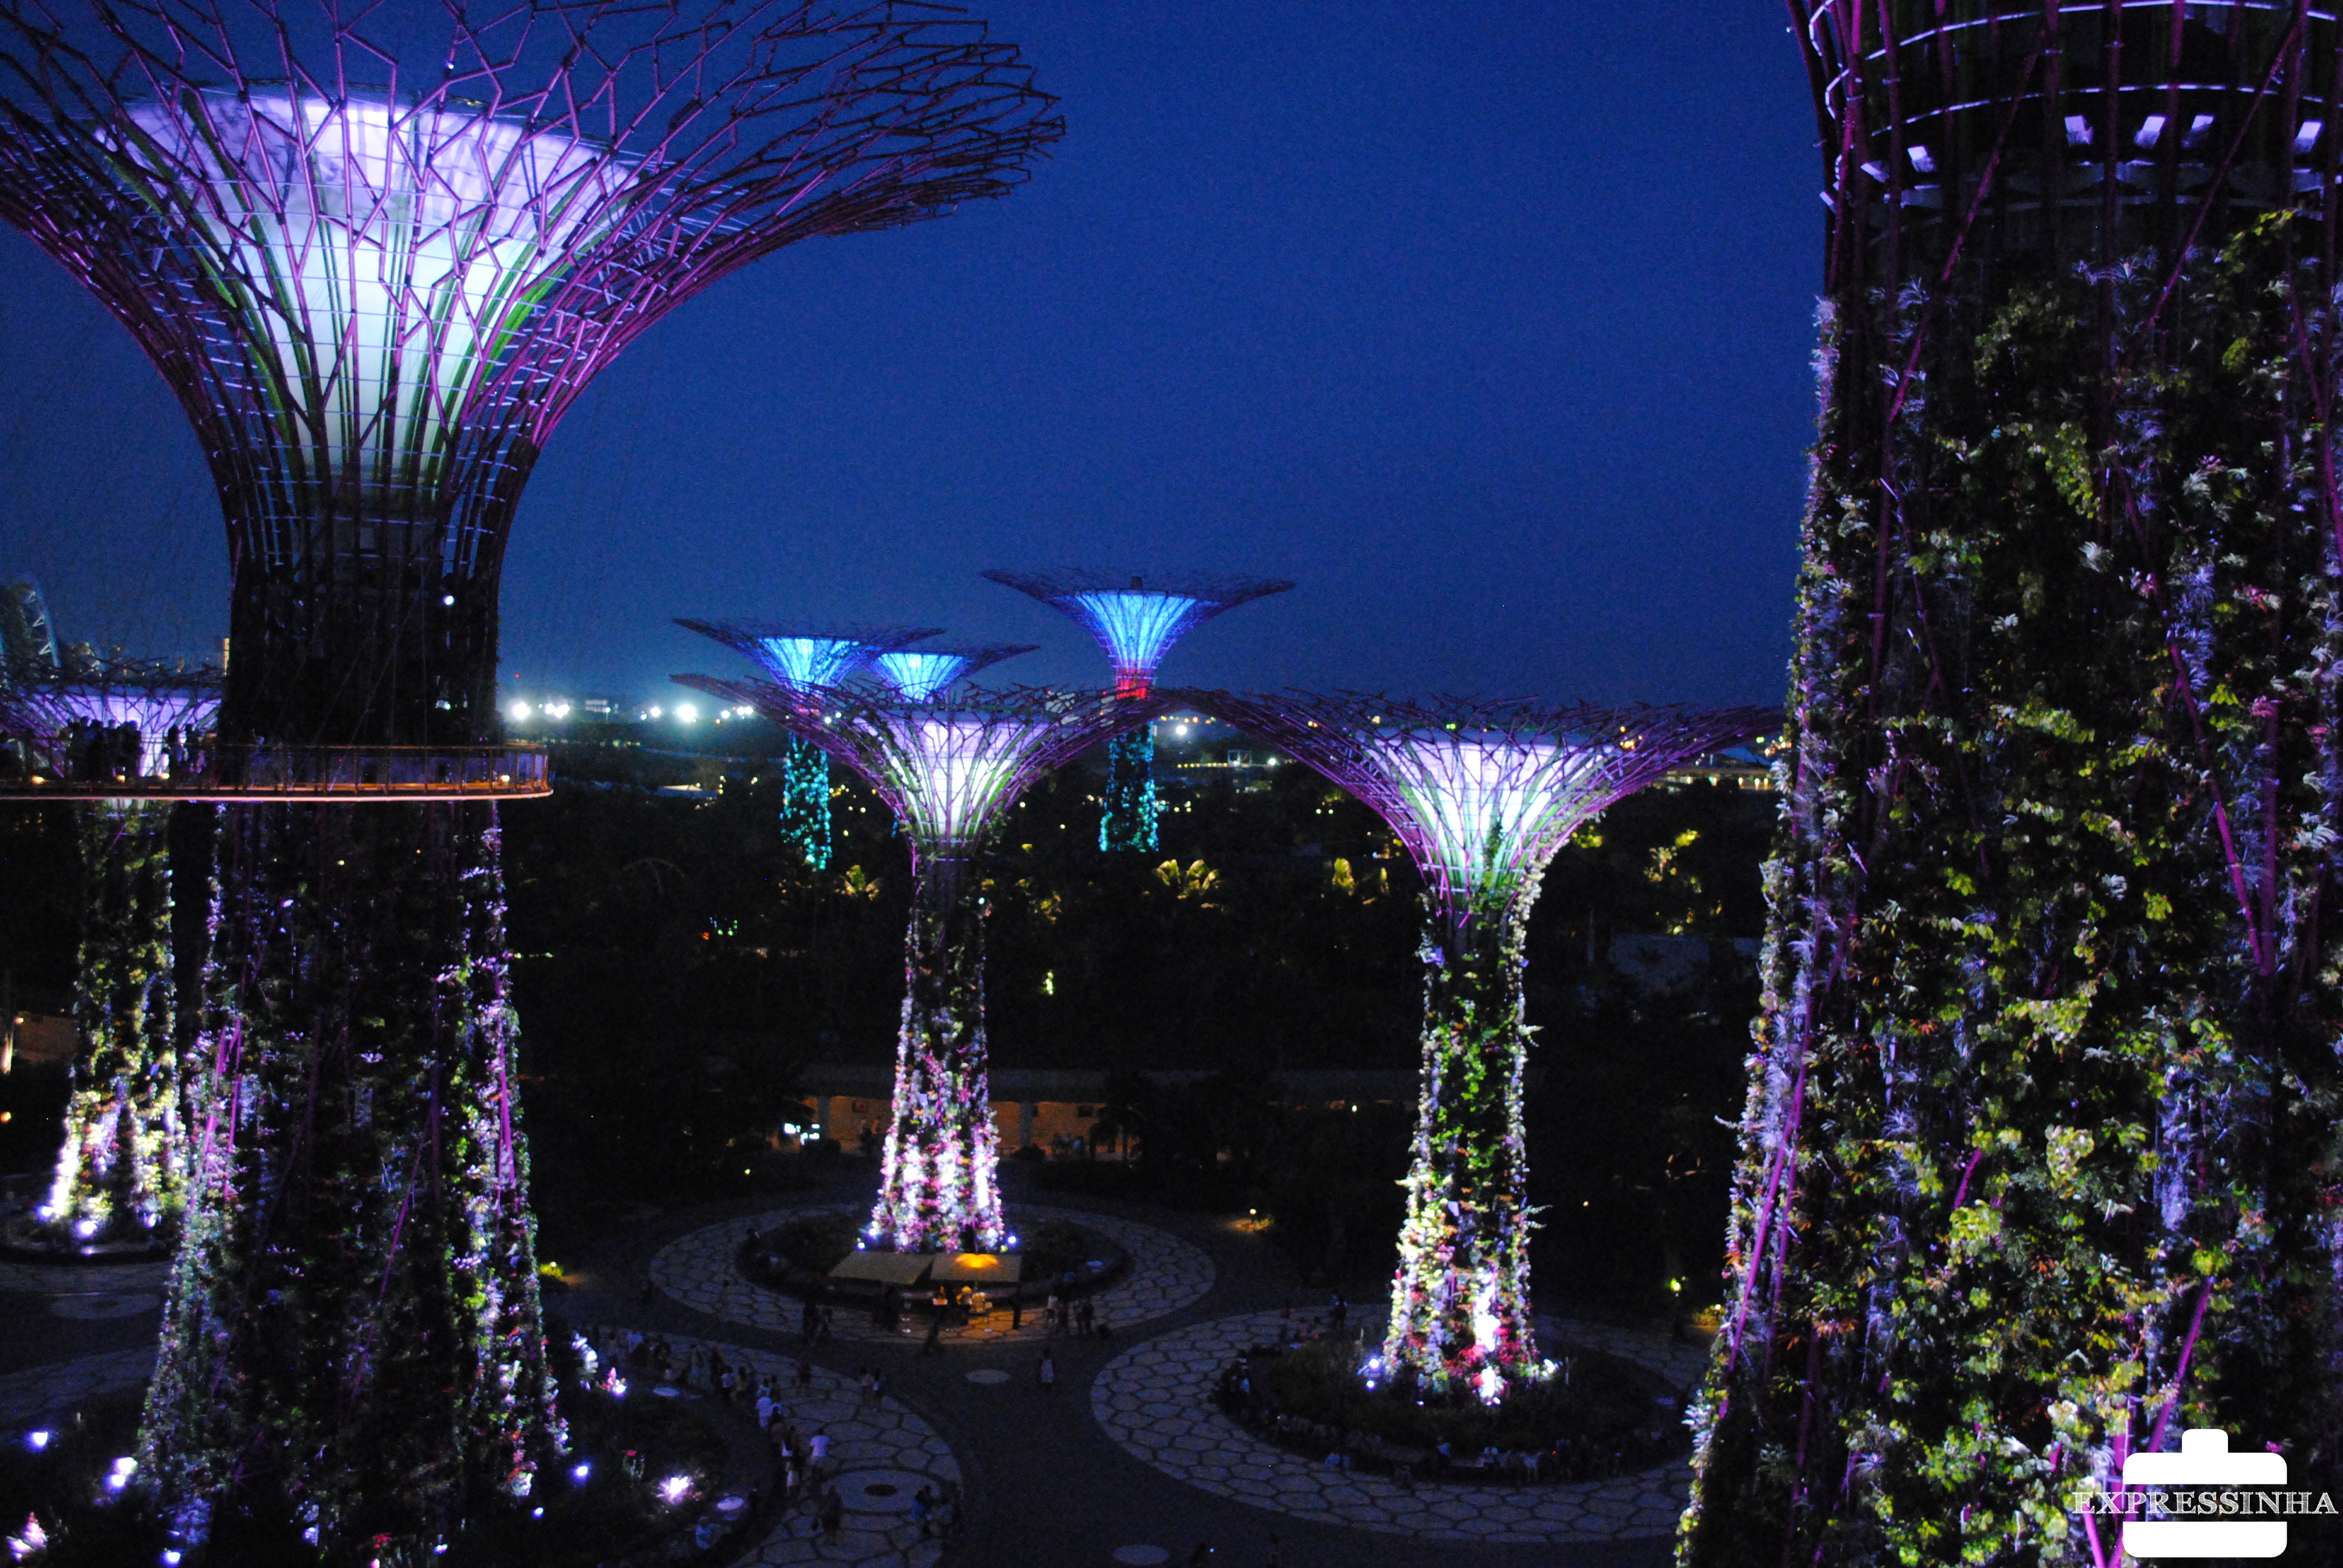 Singapura Atrações Turísticas: os "jardins".